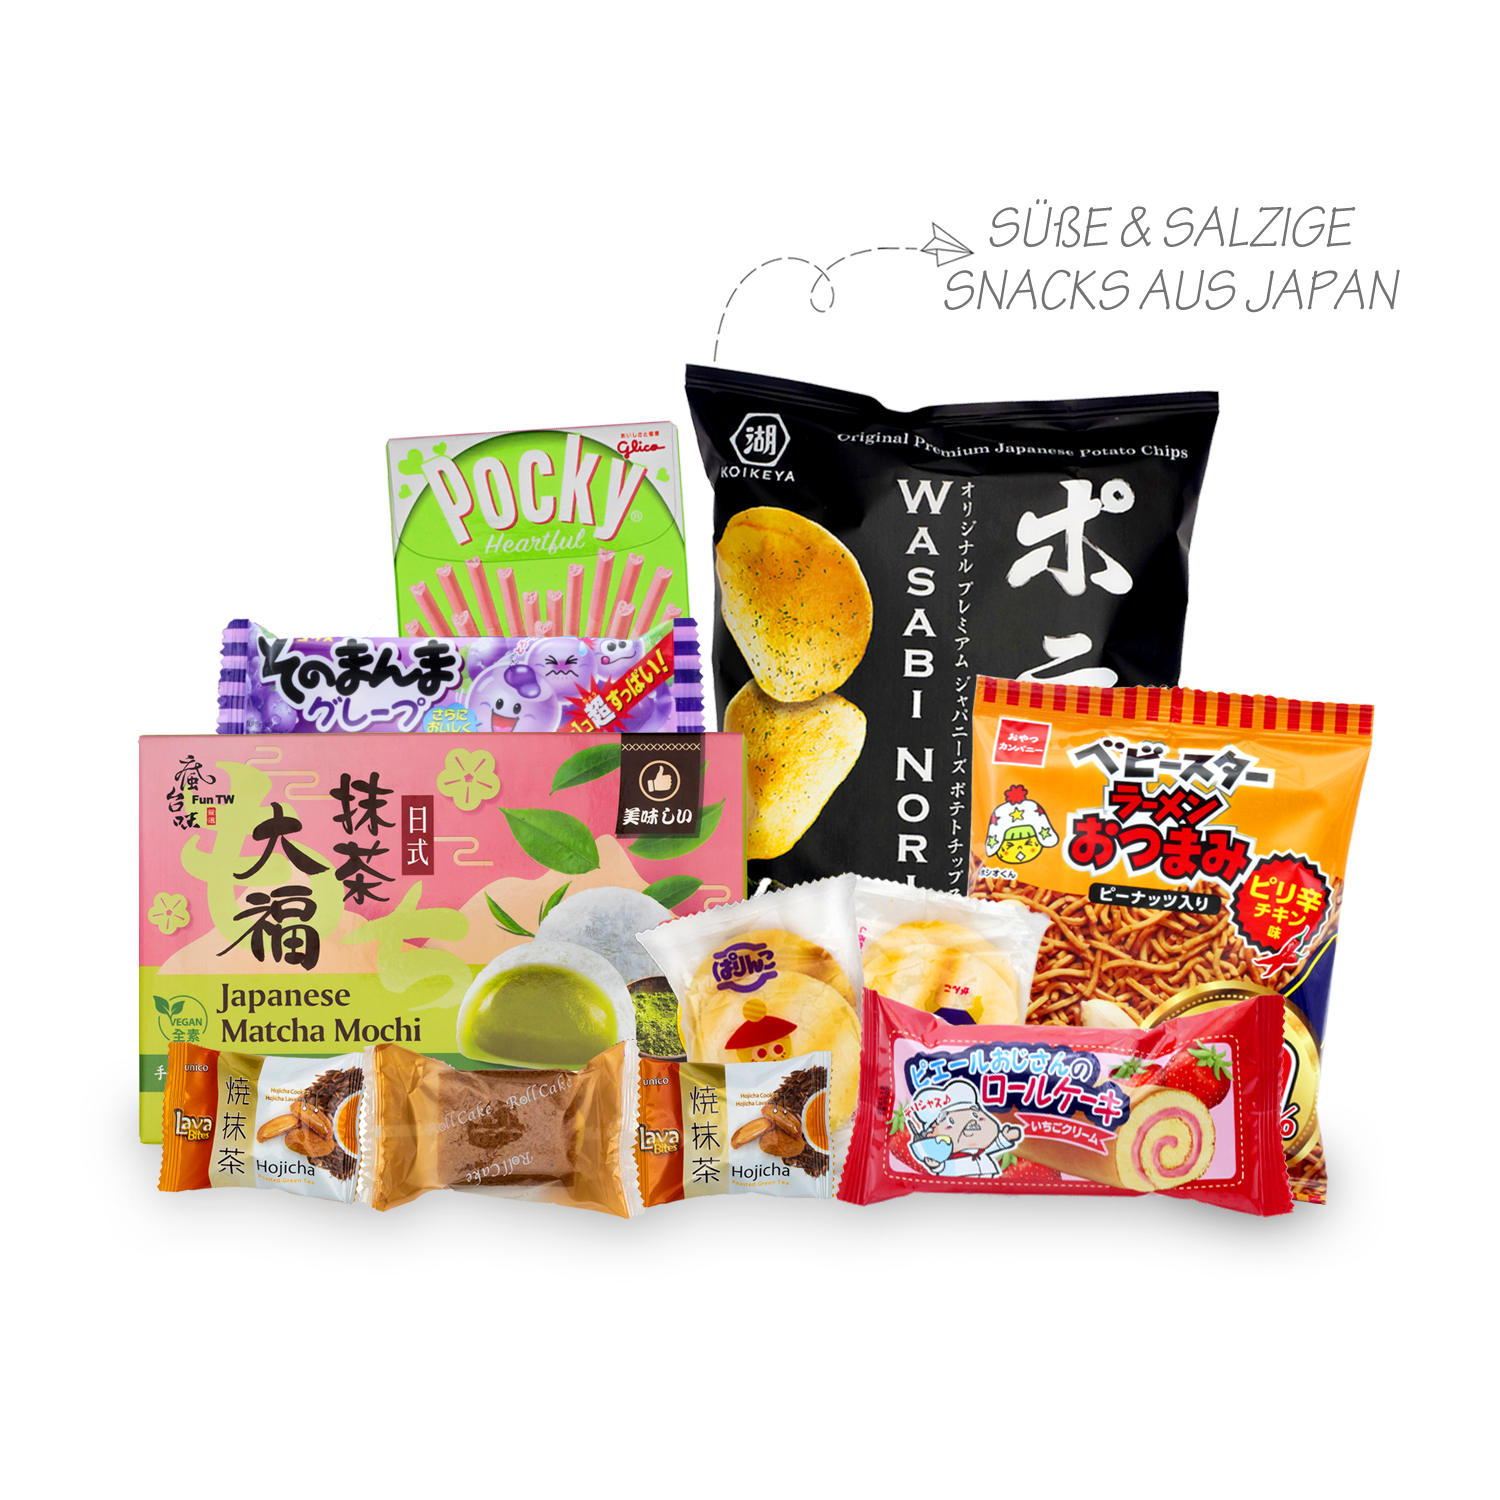 Double Candy Experience: 6 Süßigkeitenboxen aus Korea, Japan und den USA